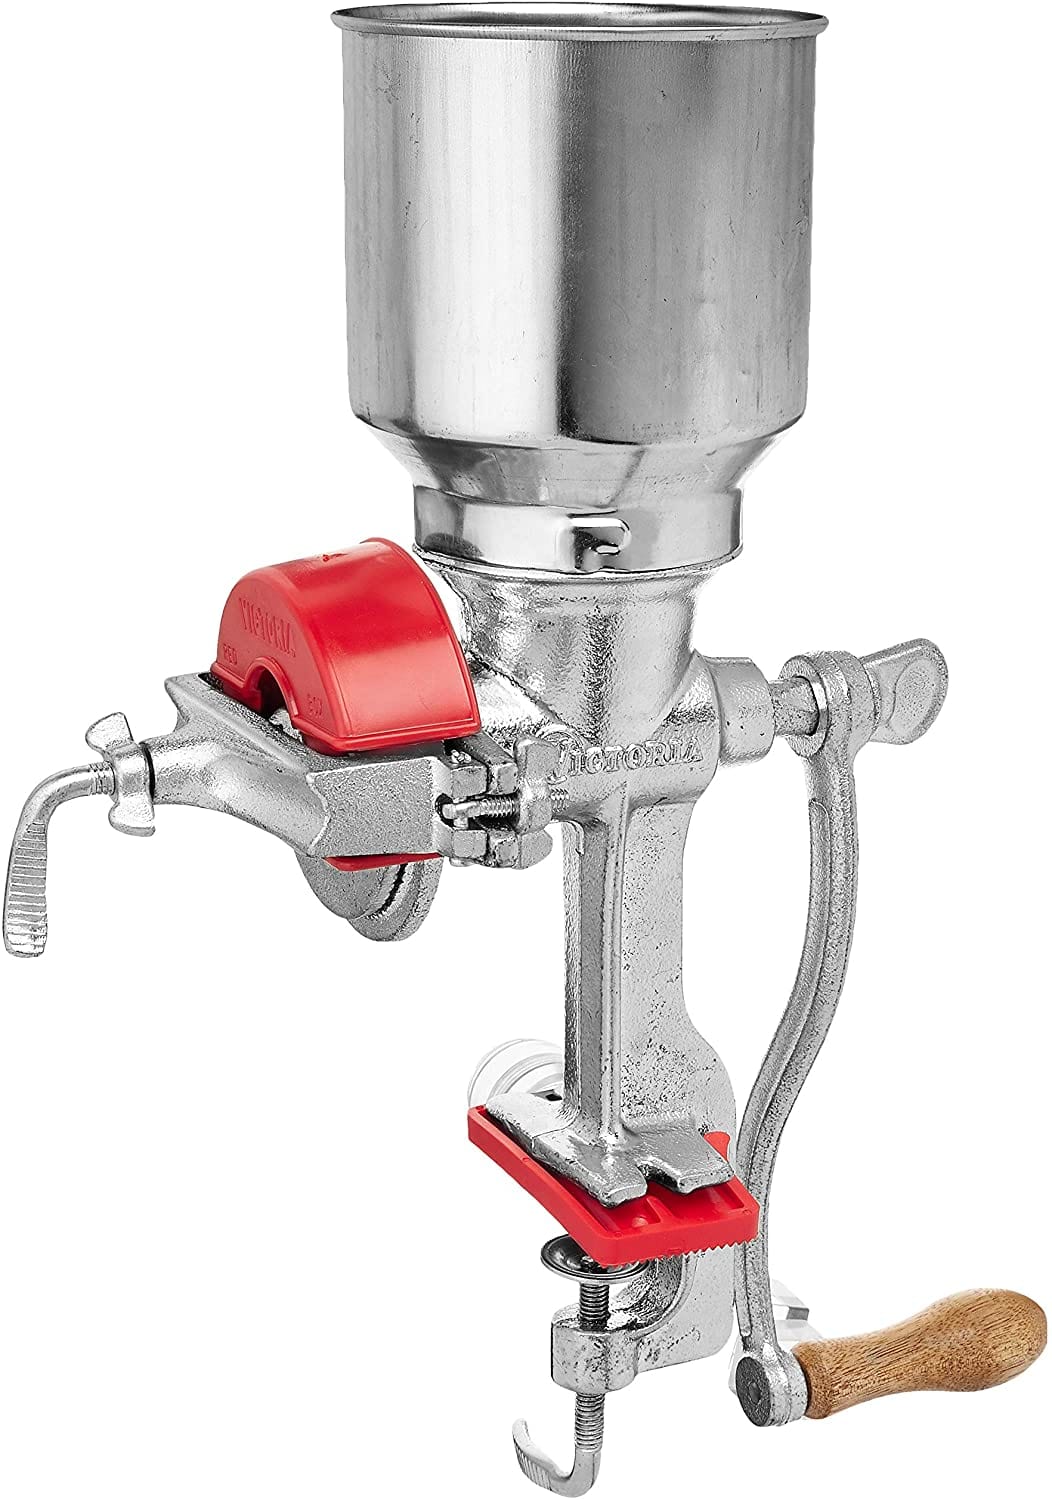 universal grinder manual nut grinder rotary